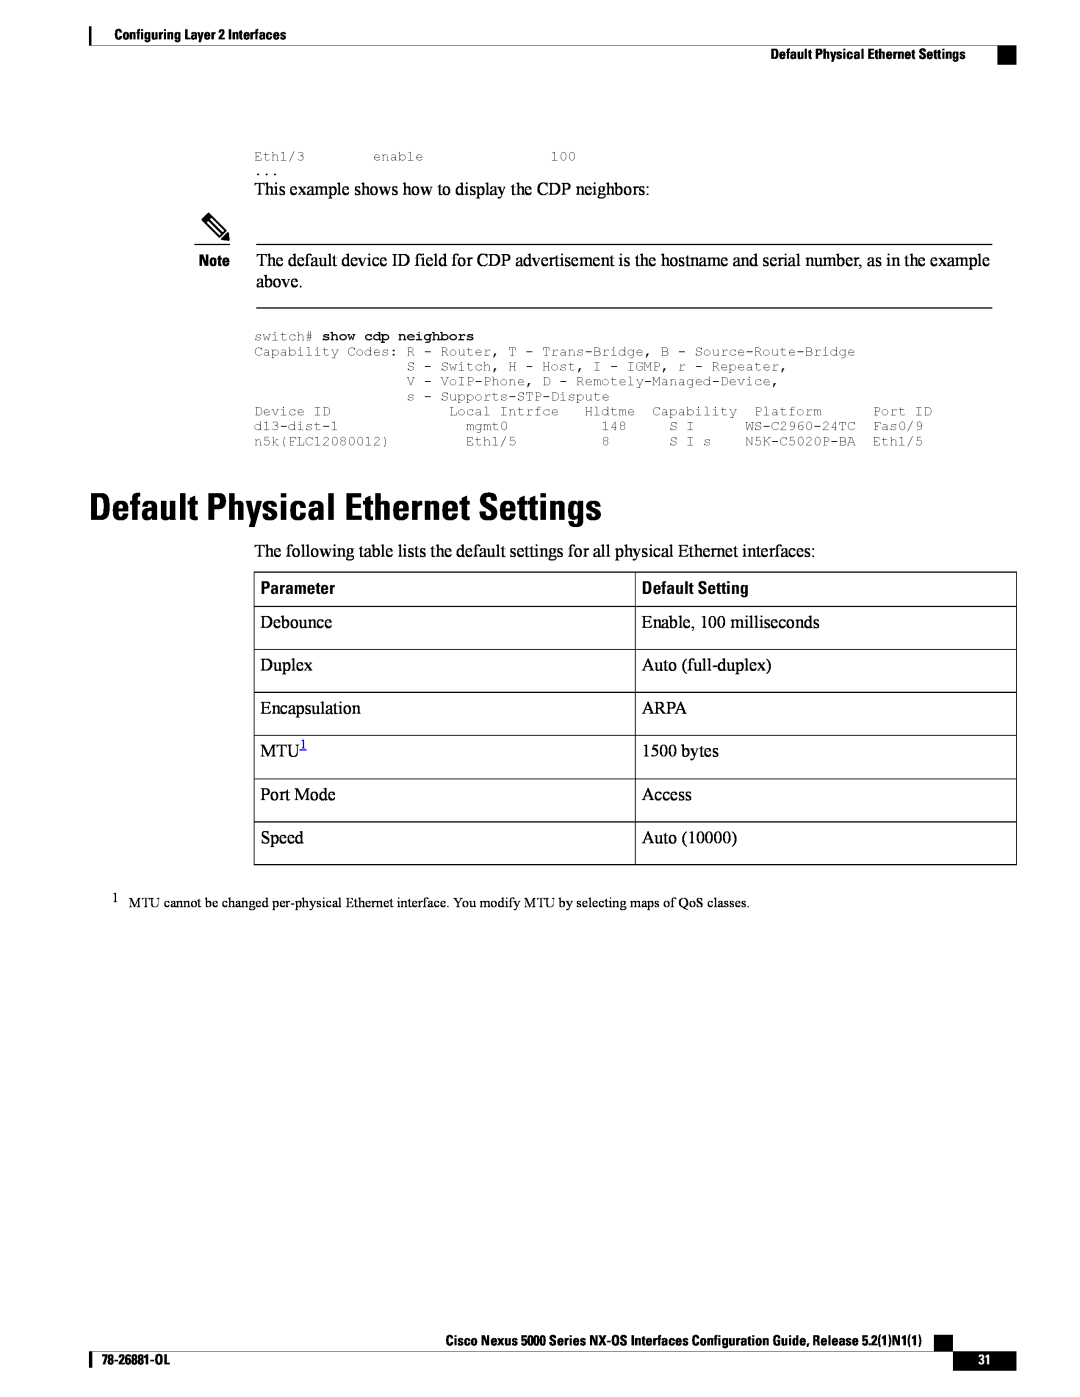 Cisco Systems N5KC5596TFA manual Default Physical Ethernet Settings, Parameter, Default Setting 